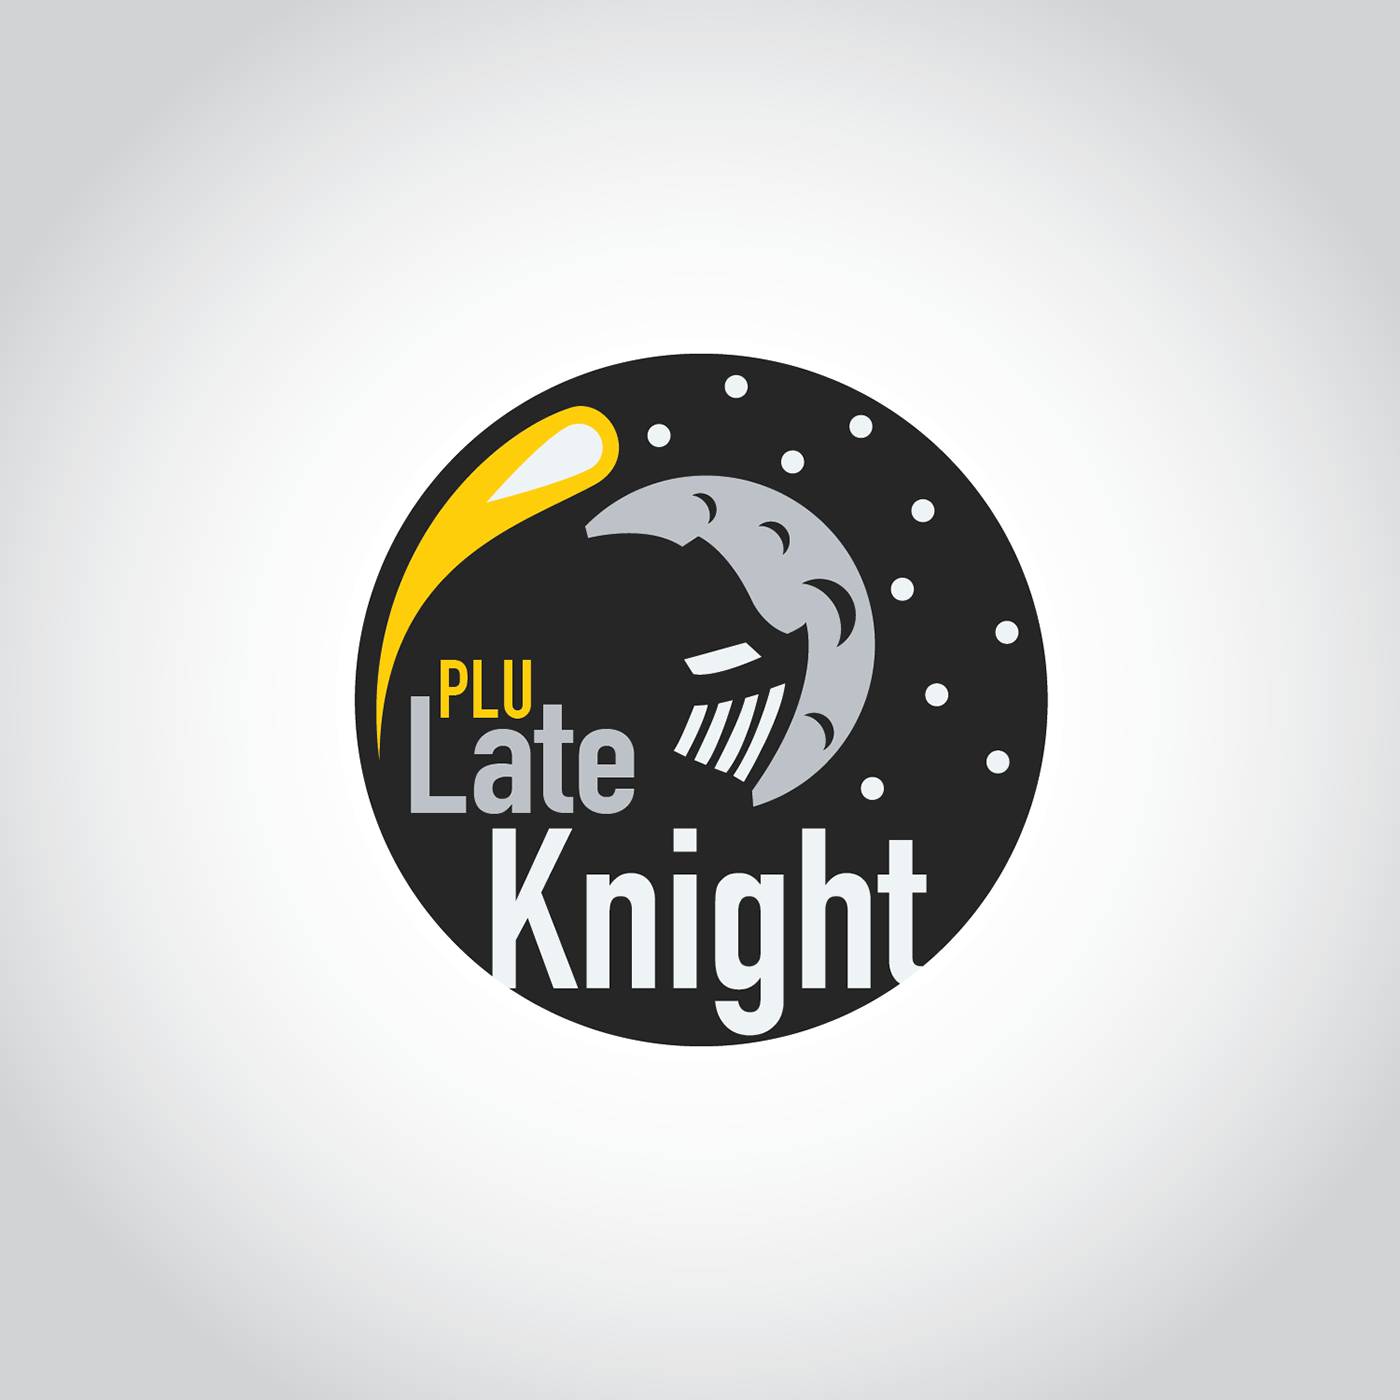 Plu Logo - PLU Late Knight Logo on Behance